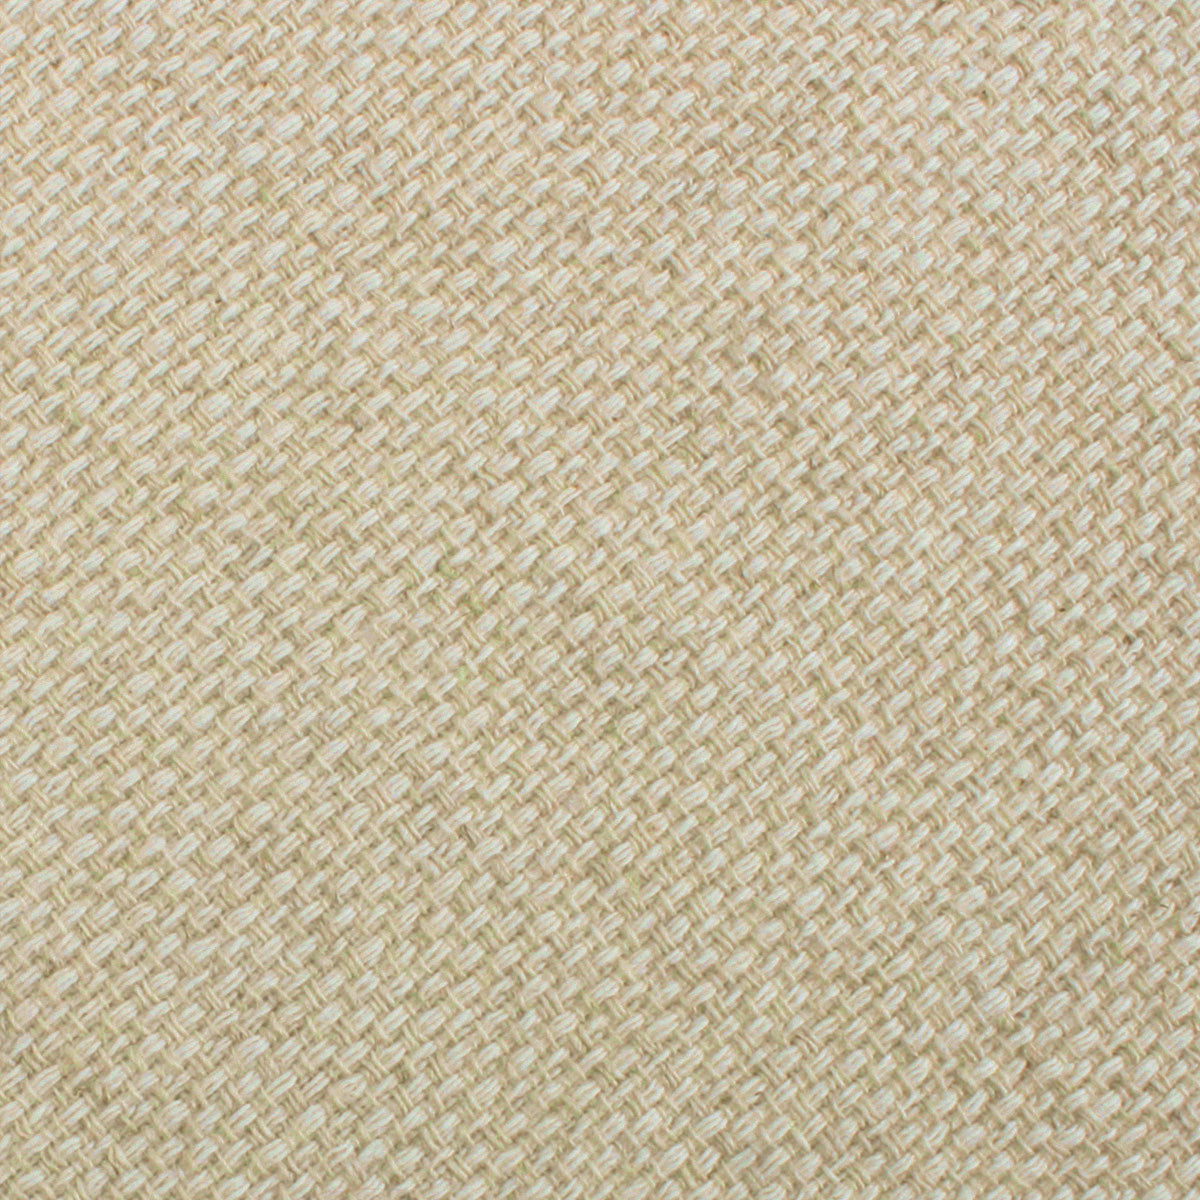 Champagne Basket Weave Linen Pocket Square Fabric